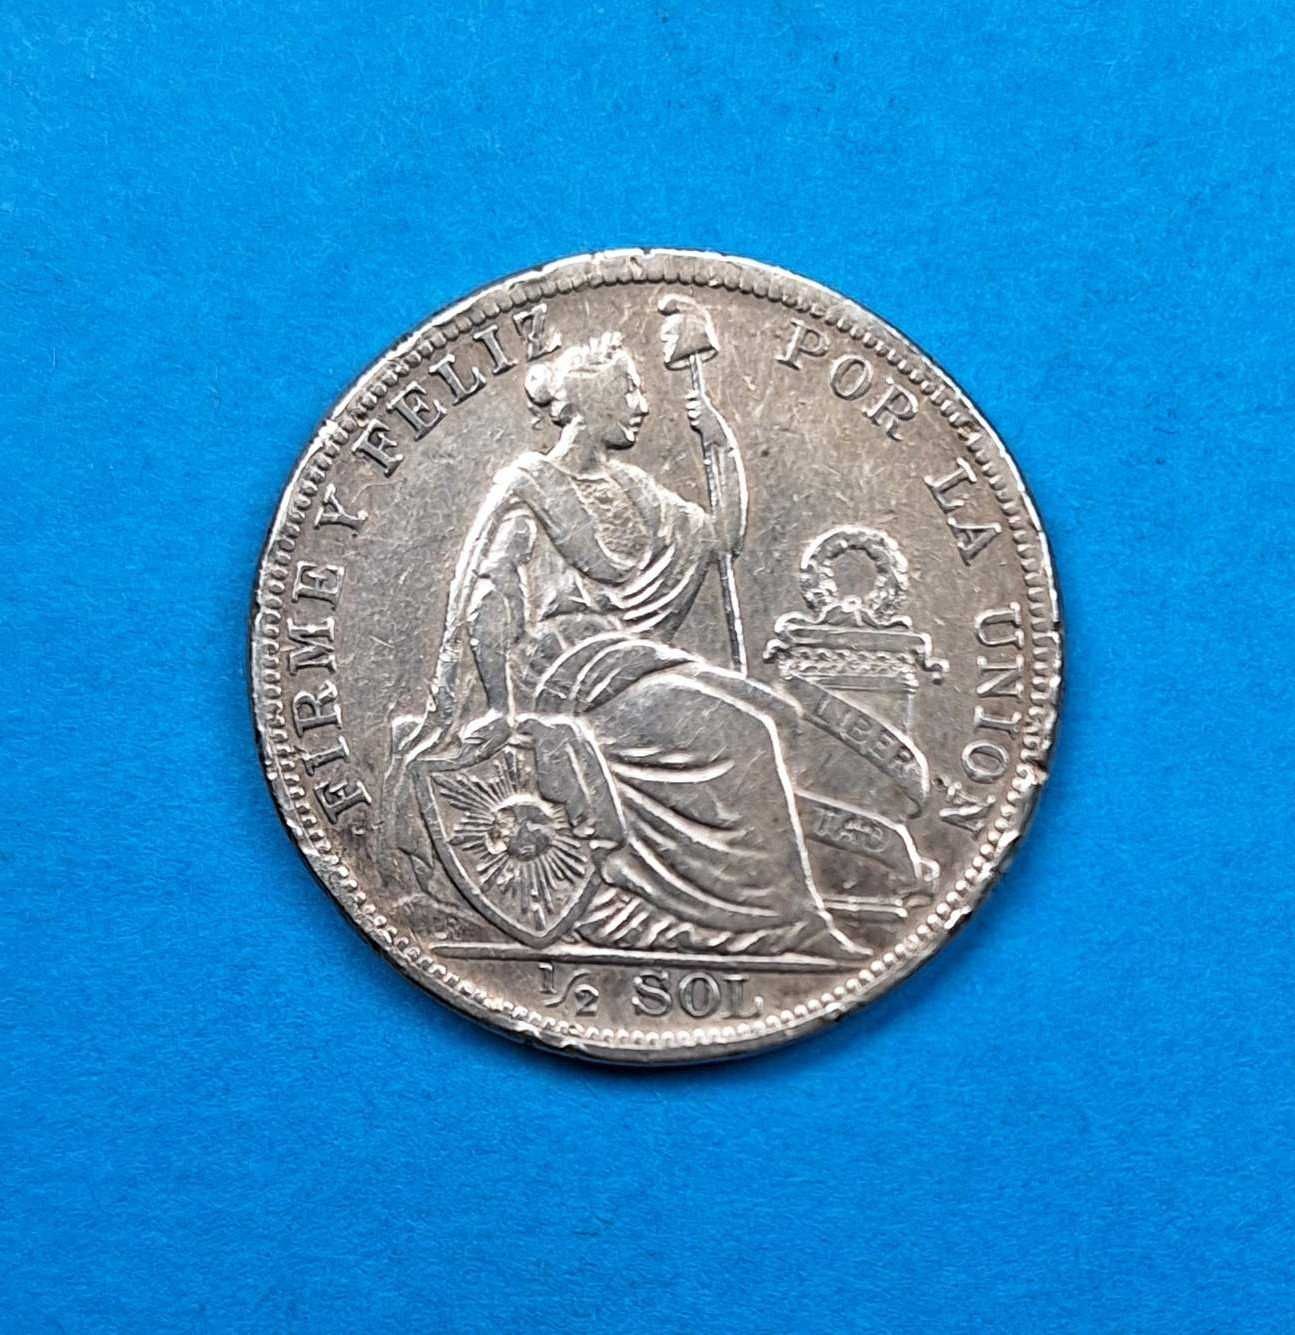 Peru 1/2 sola rok 1908, dobry stan, srebro 0,900